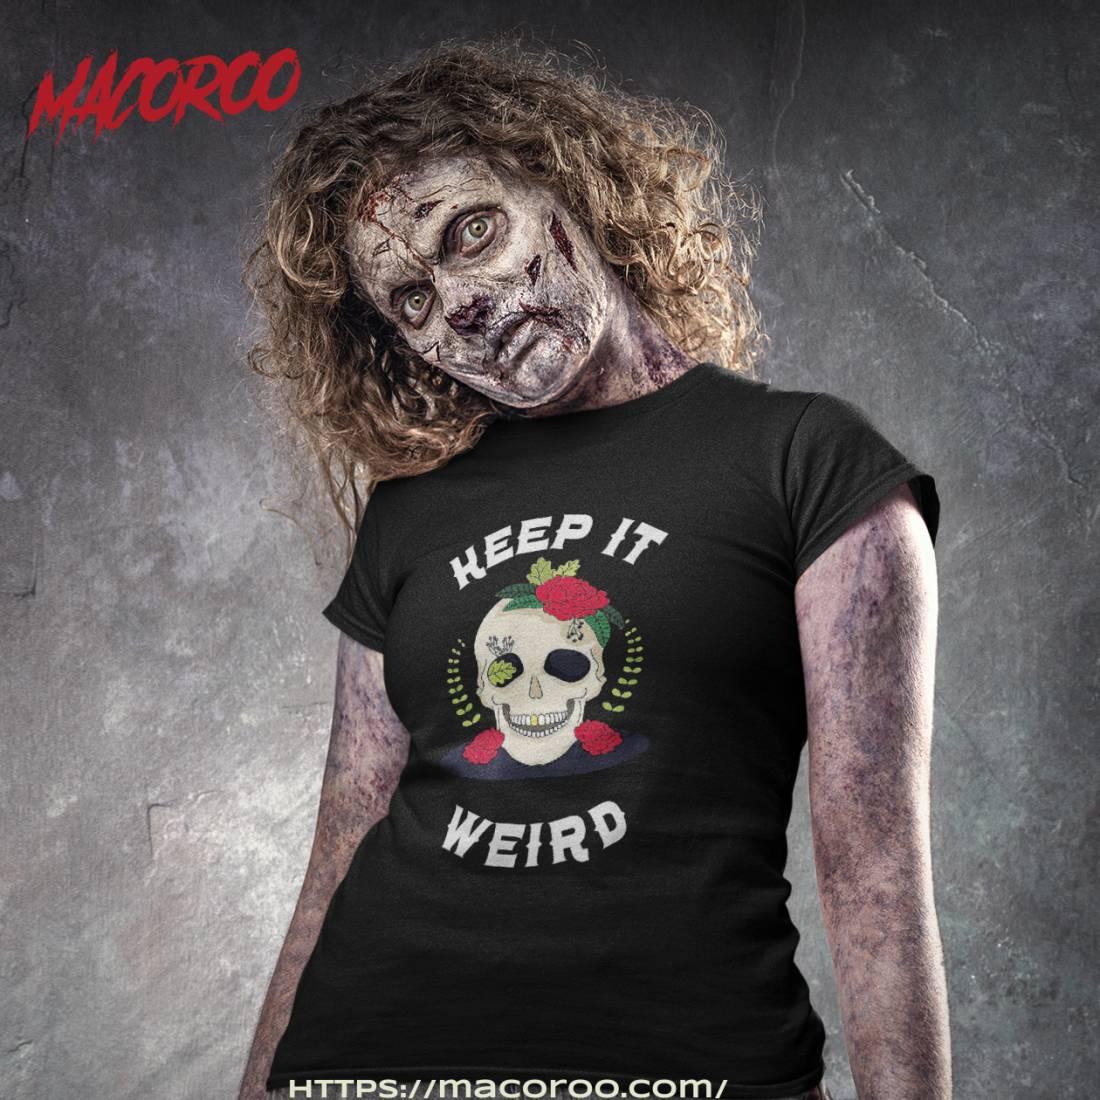 Keep It Weird Amp Acirc Amp 128 Amp 147 Halloween Creepy Skull Spooky Calavera Shirt Spooky Scary Skeletons Tshirt